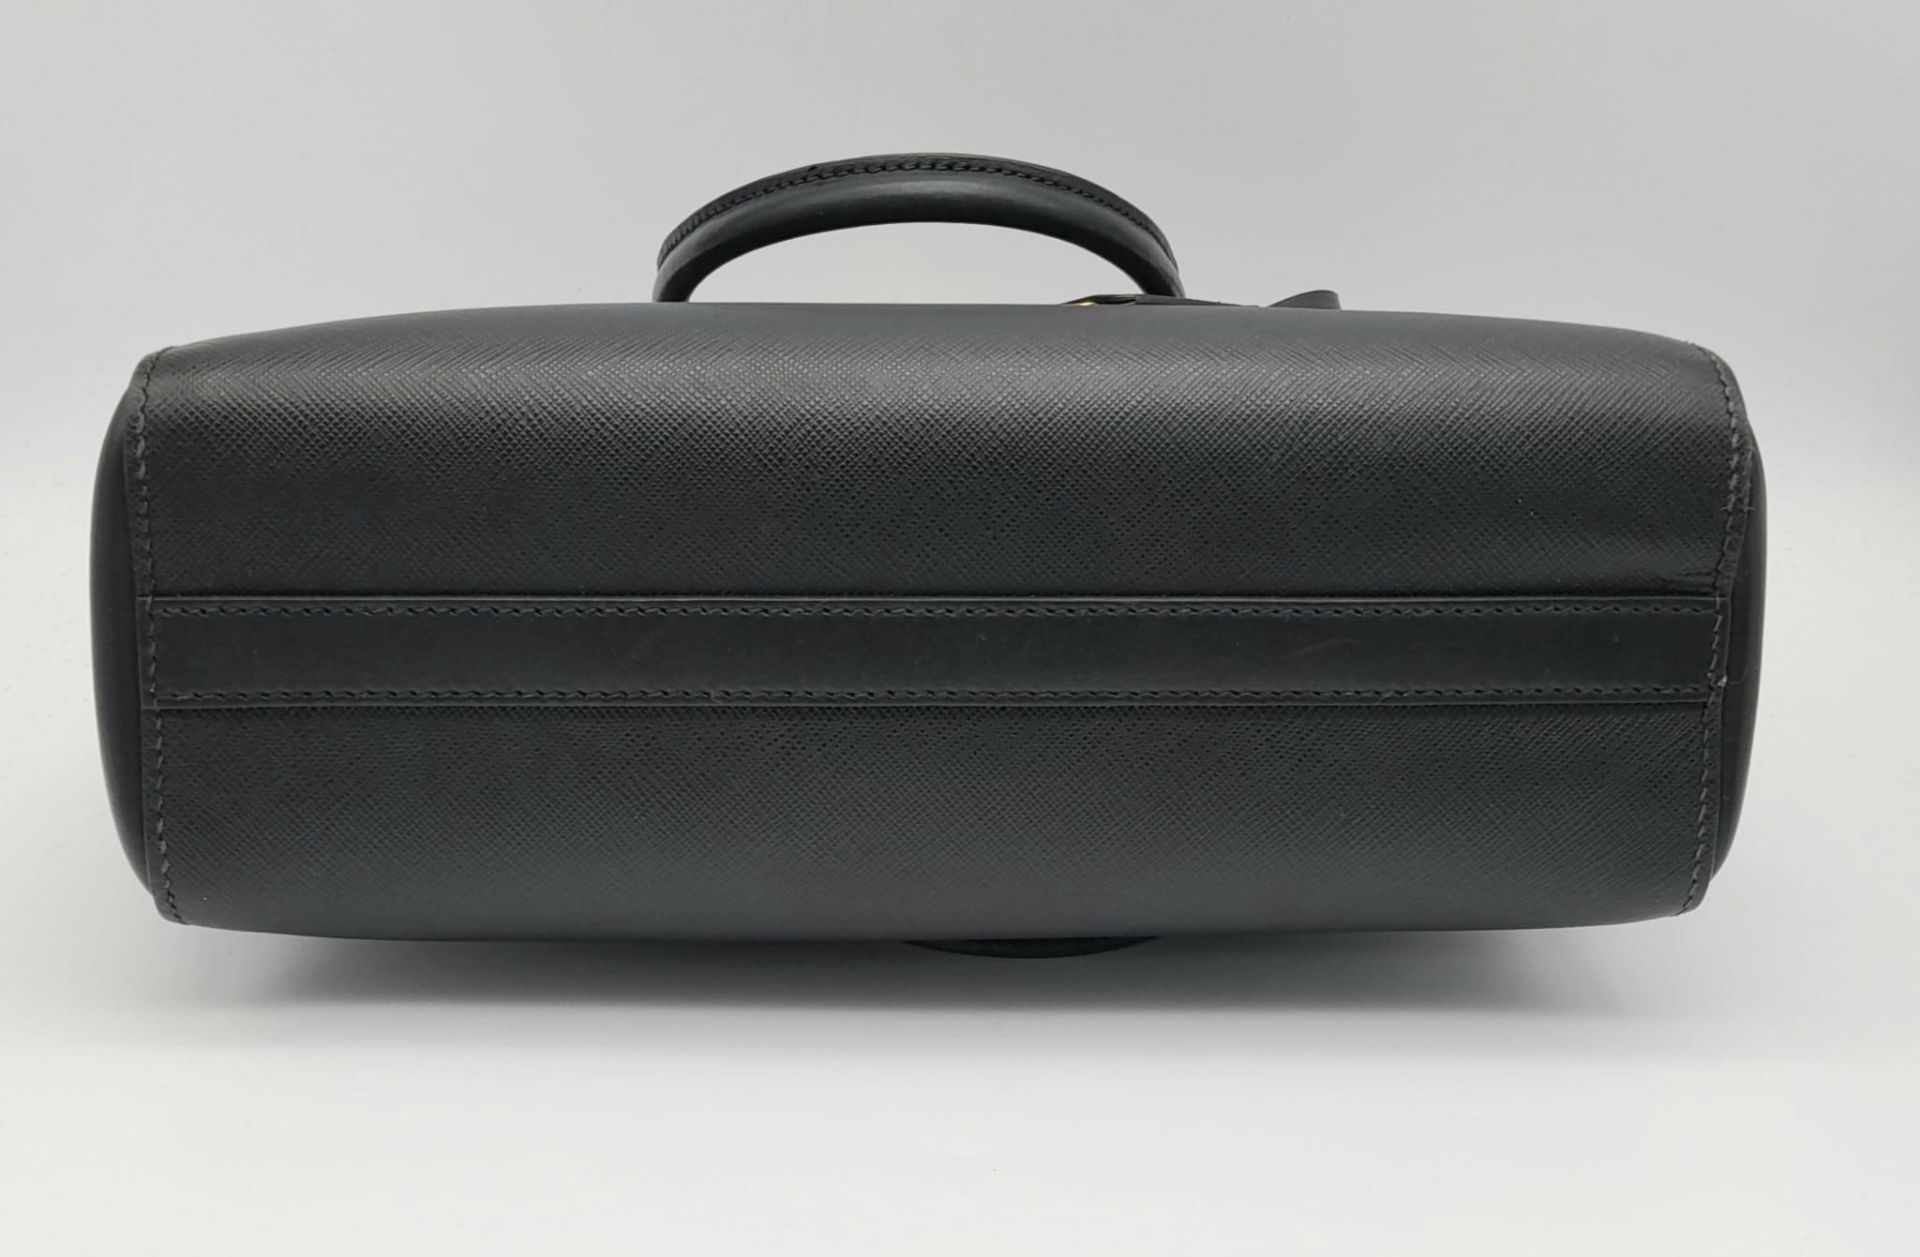 A Prada Black Leather Handbag with Adjustable Shoulder Strap. Textured leather with gold-tone - Bild 4 aus 8